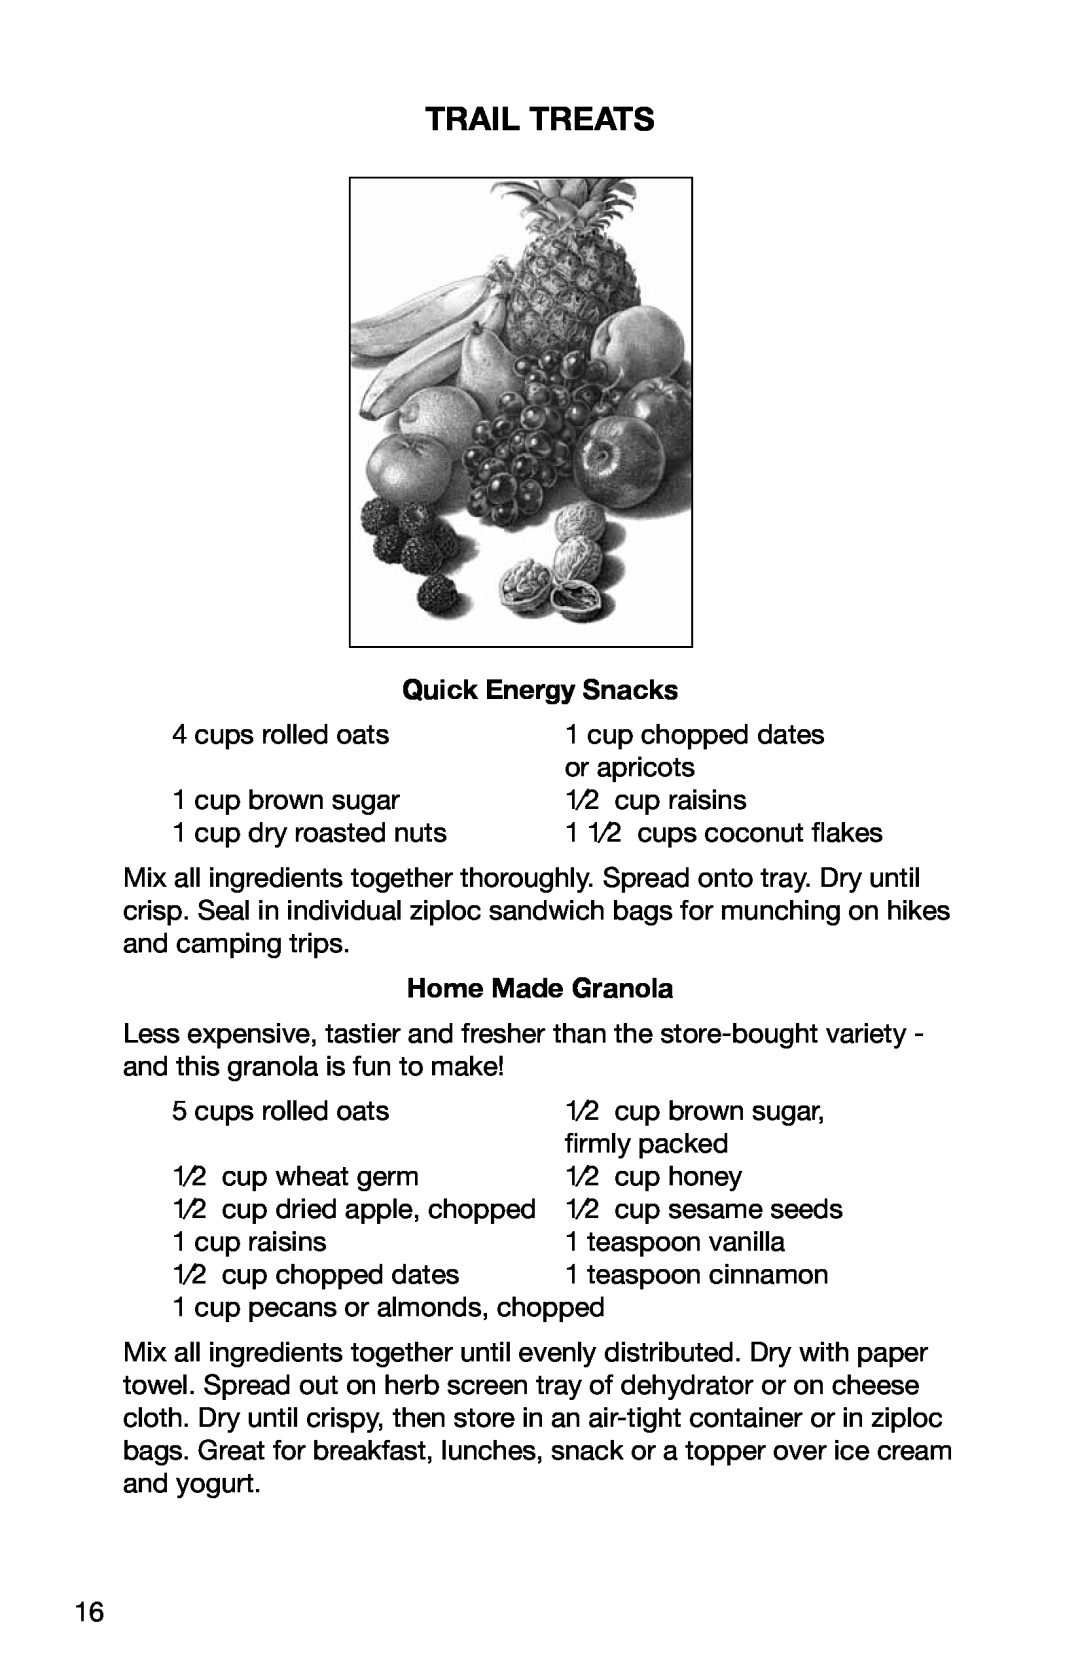 Ronco Food Saver manual Trail Treats, Quick Energy Snacks, Home Made Granola 